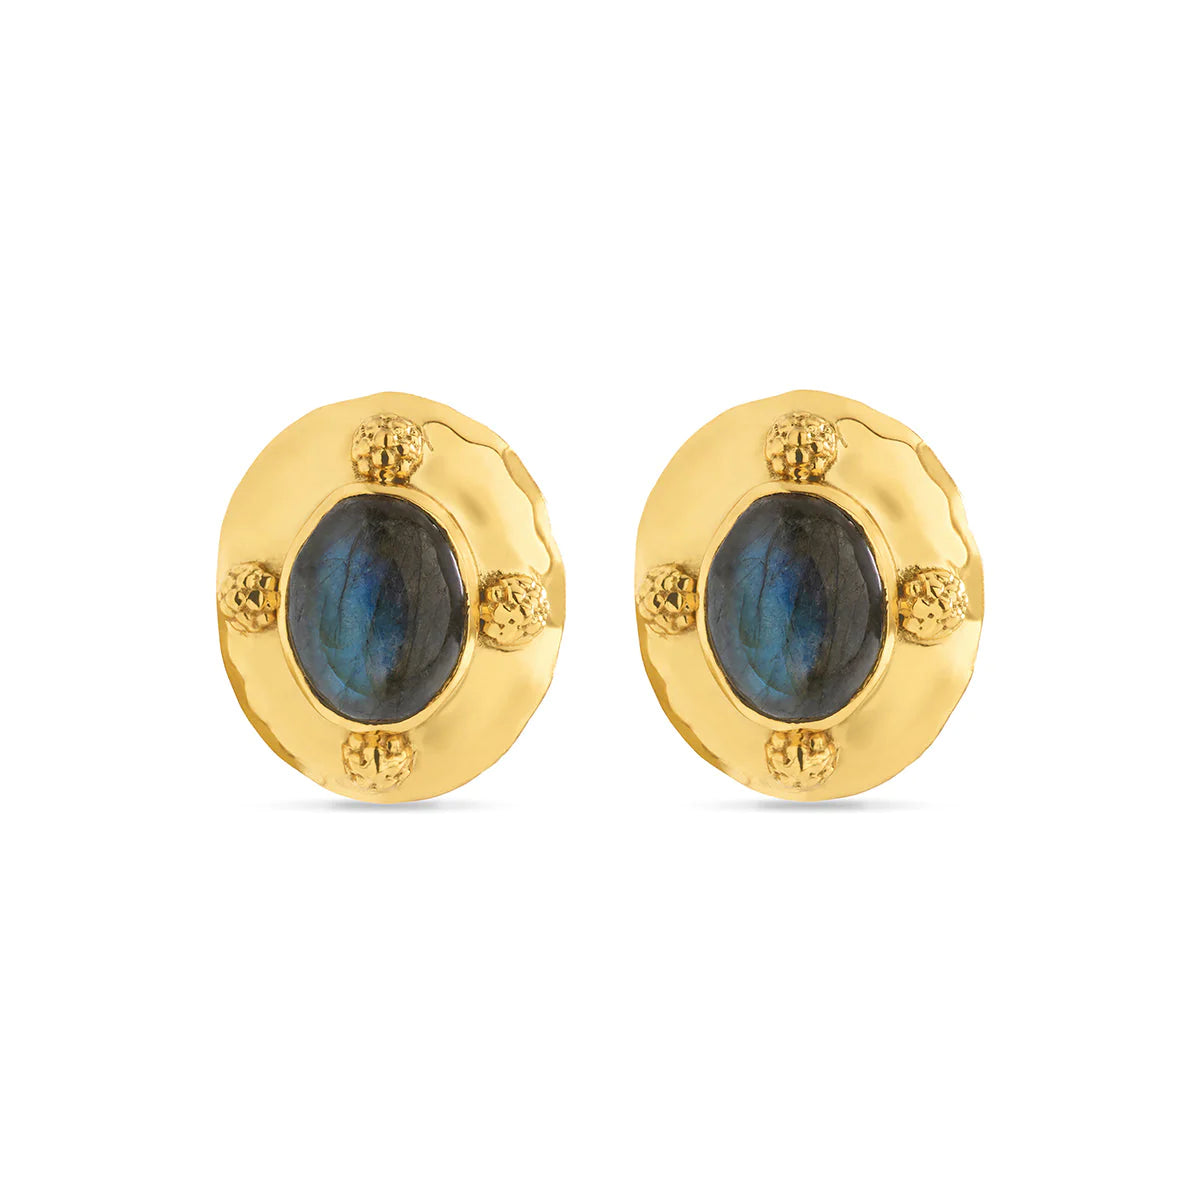 Capucine de Wulf Cleopatra Oval Clip Earrings in Gold/Blue Labradorite